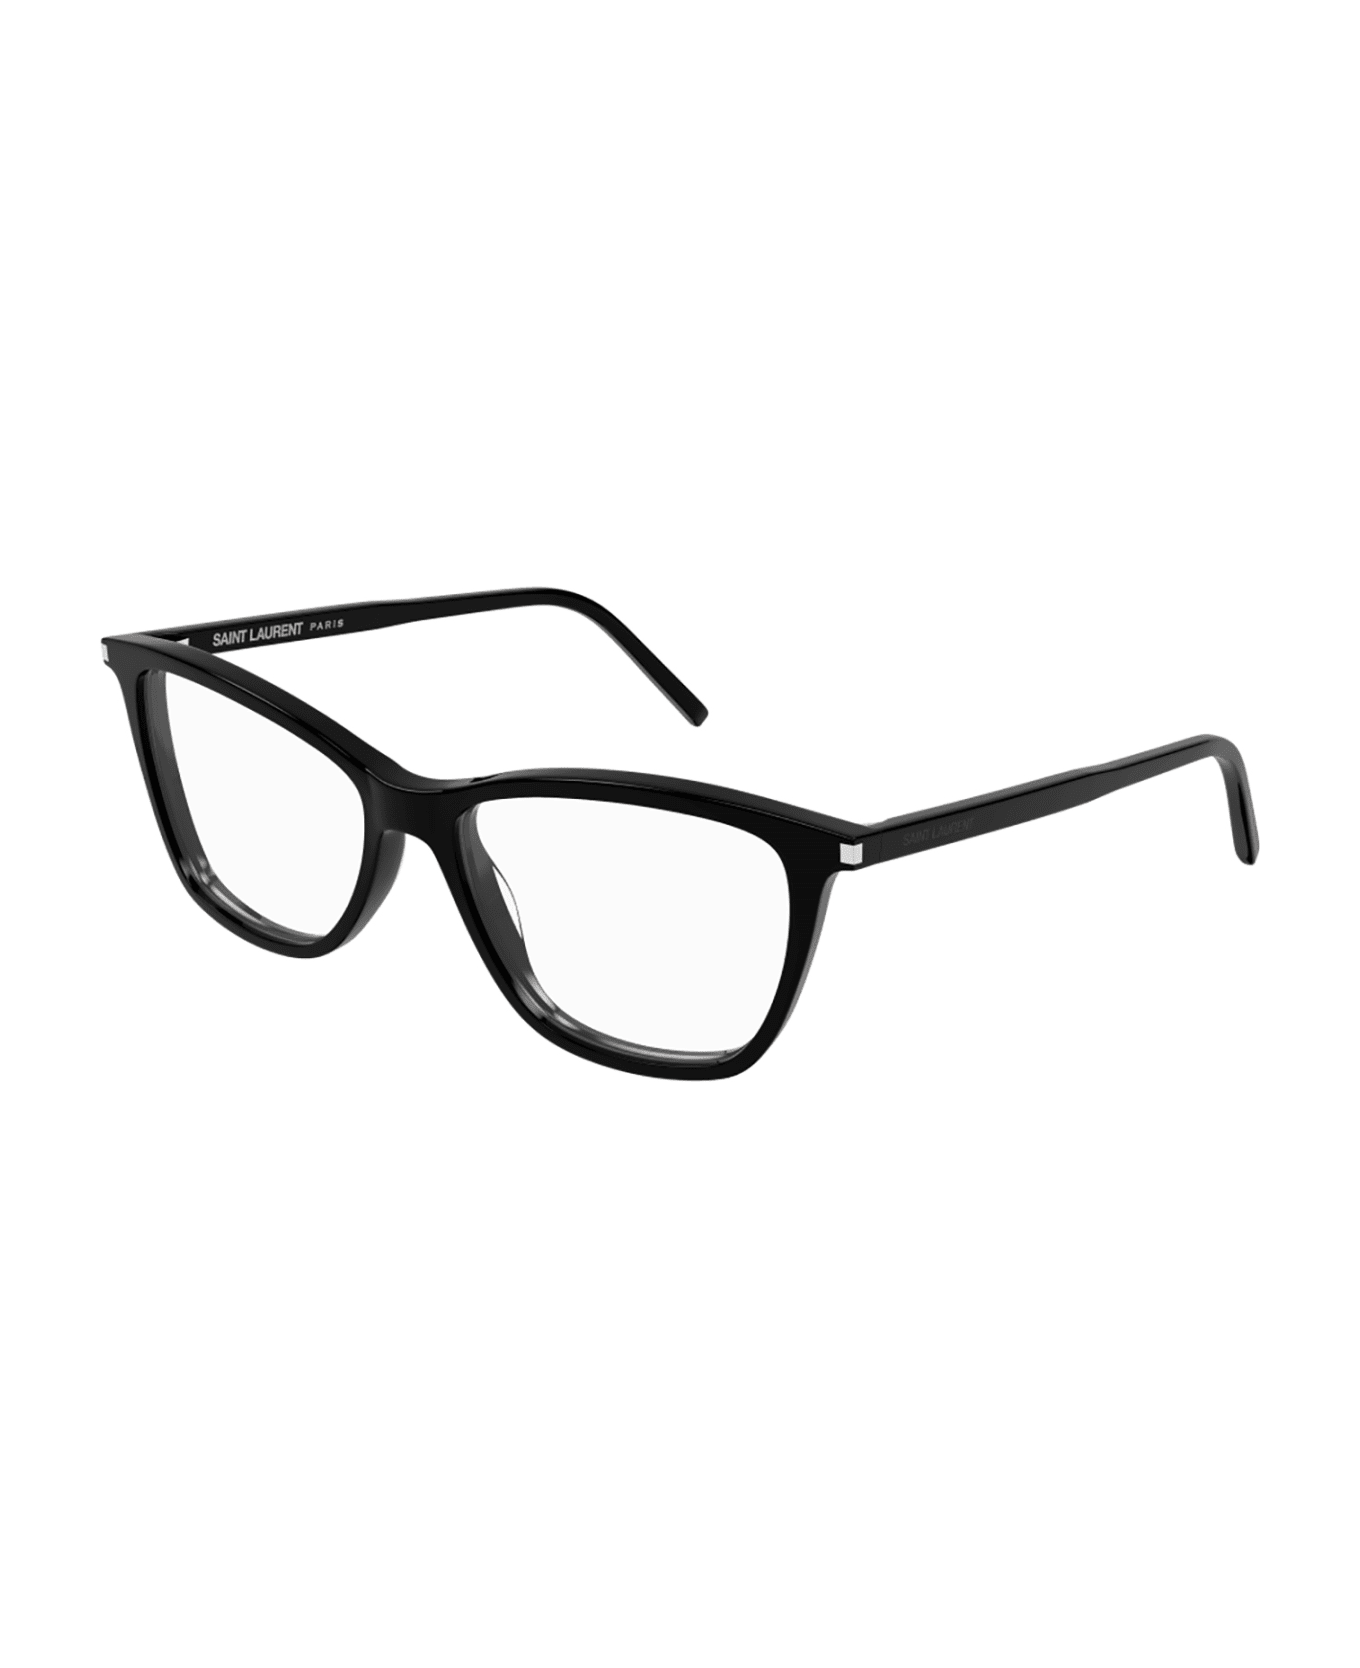 Saint Laurent Eyewear SL 259 Eyewear - Black Black Transpare